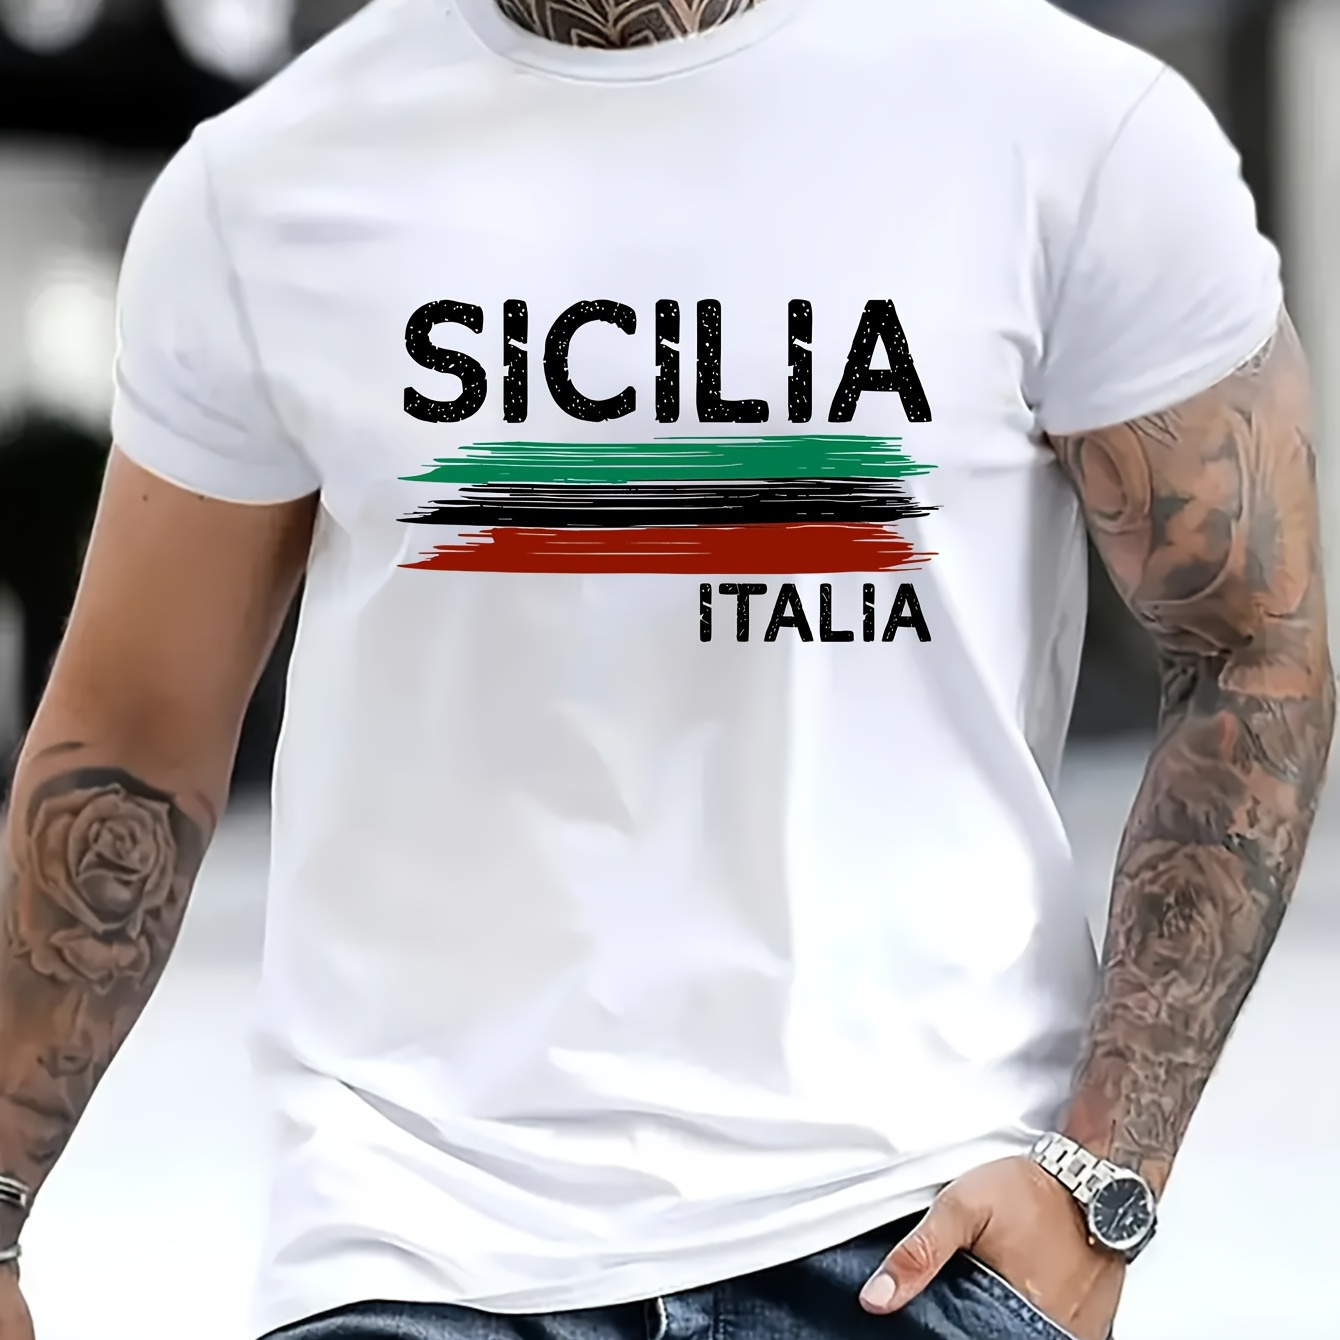 

Sicilia Italia Letter Print Men's Casual & Comfortable Crew Neck Short Sleeve T-shirt, Suitable For Summer Outdoor Activities